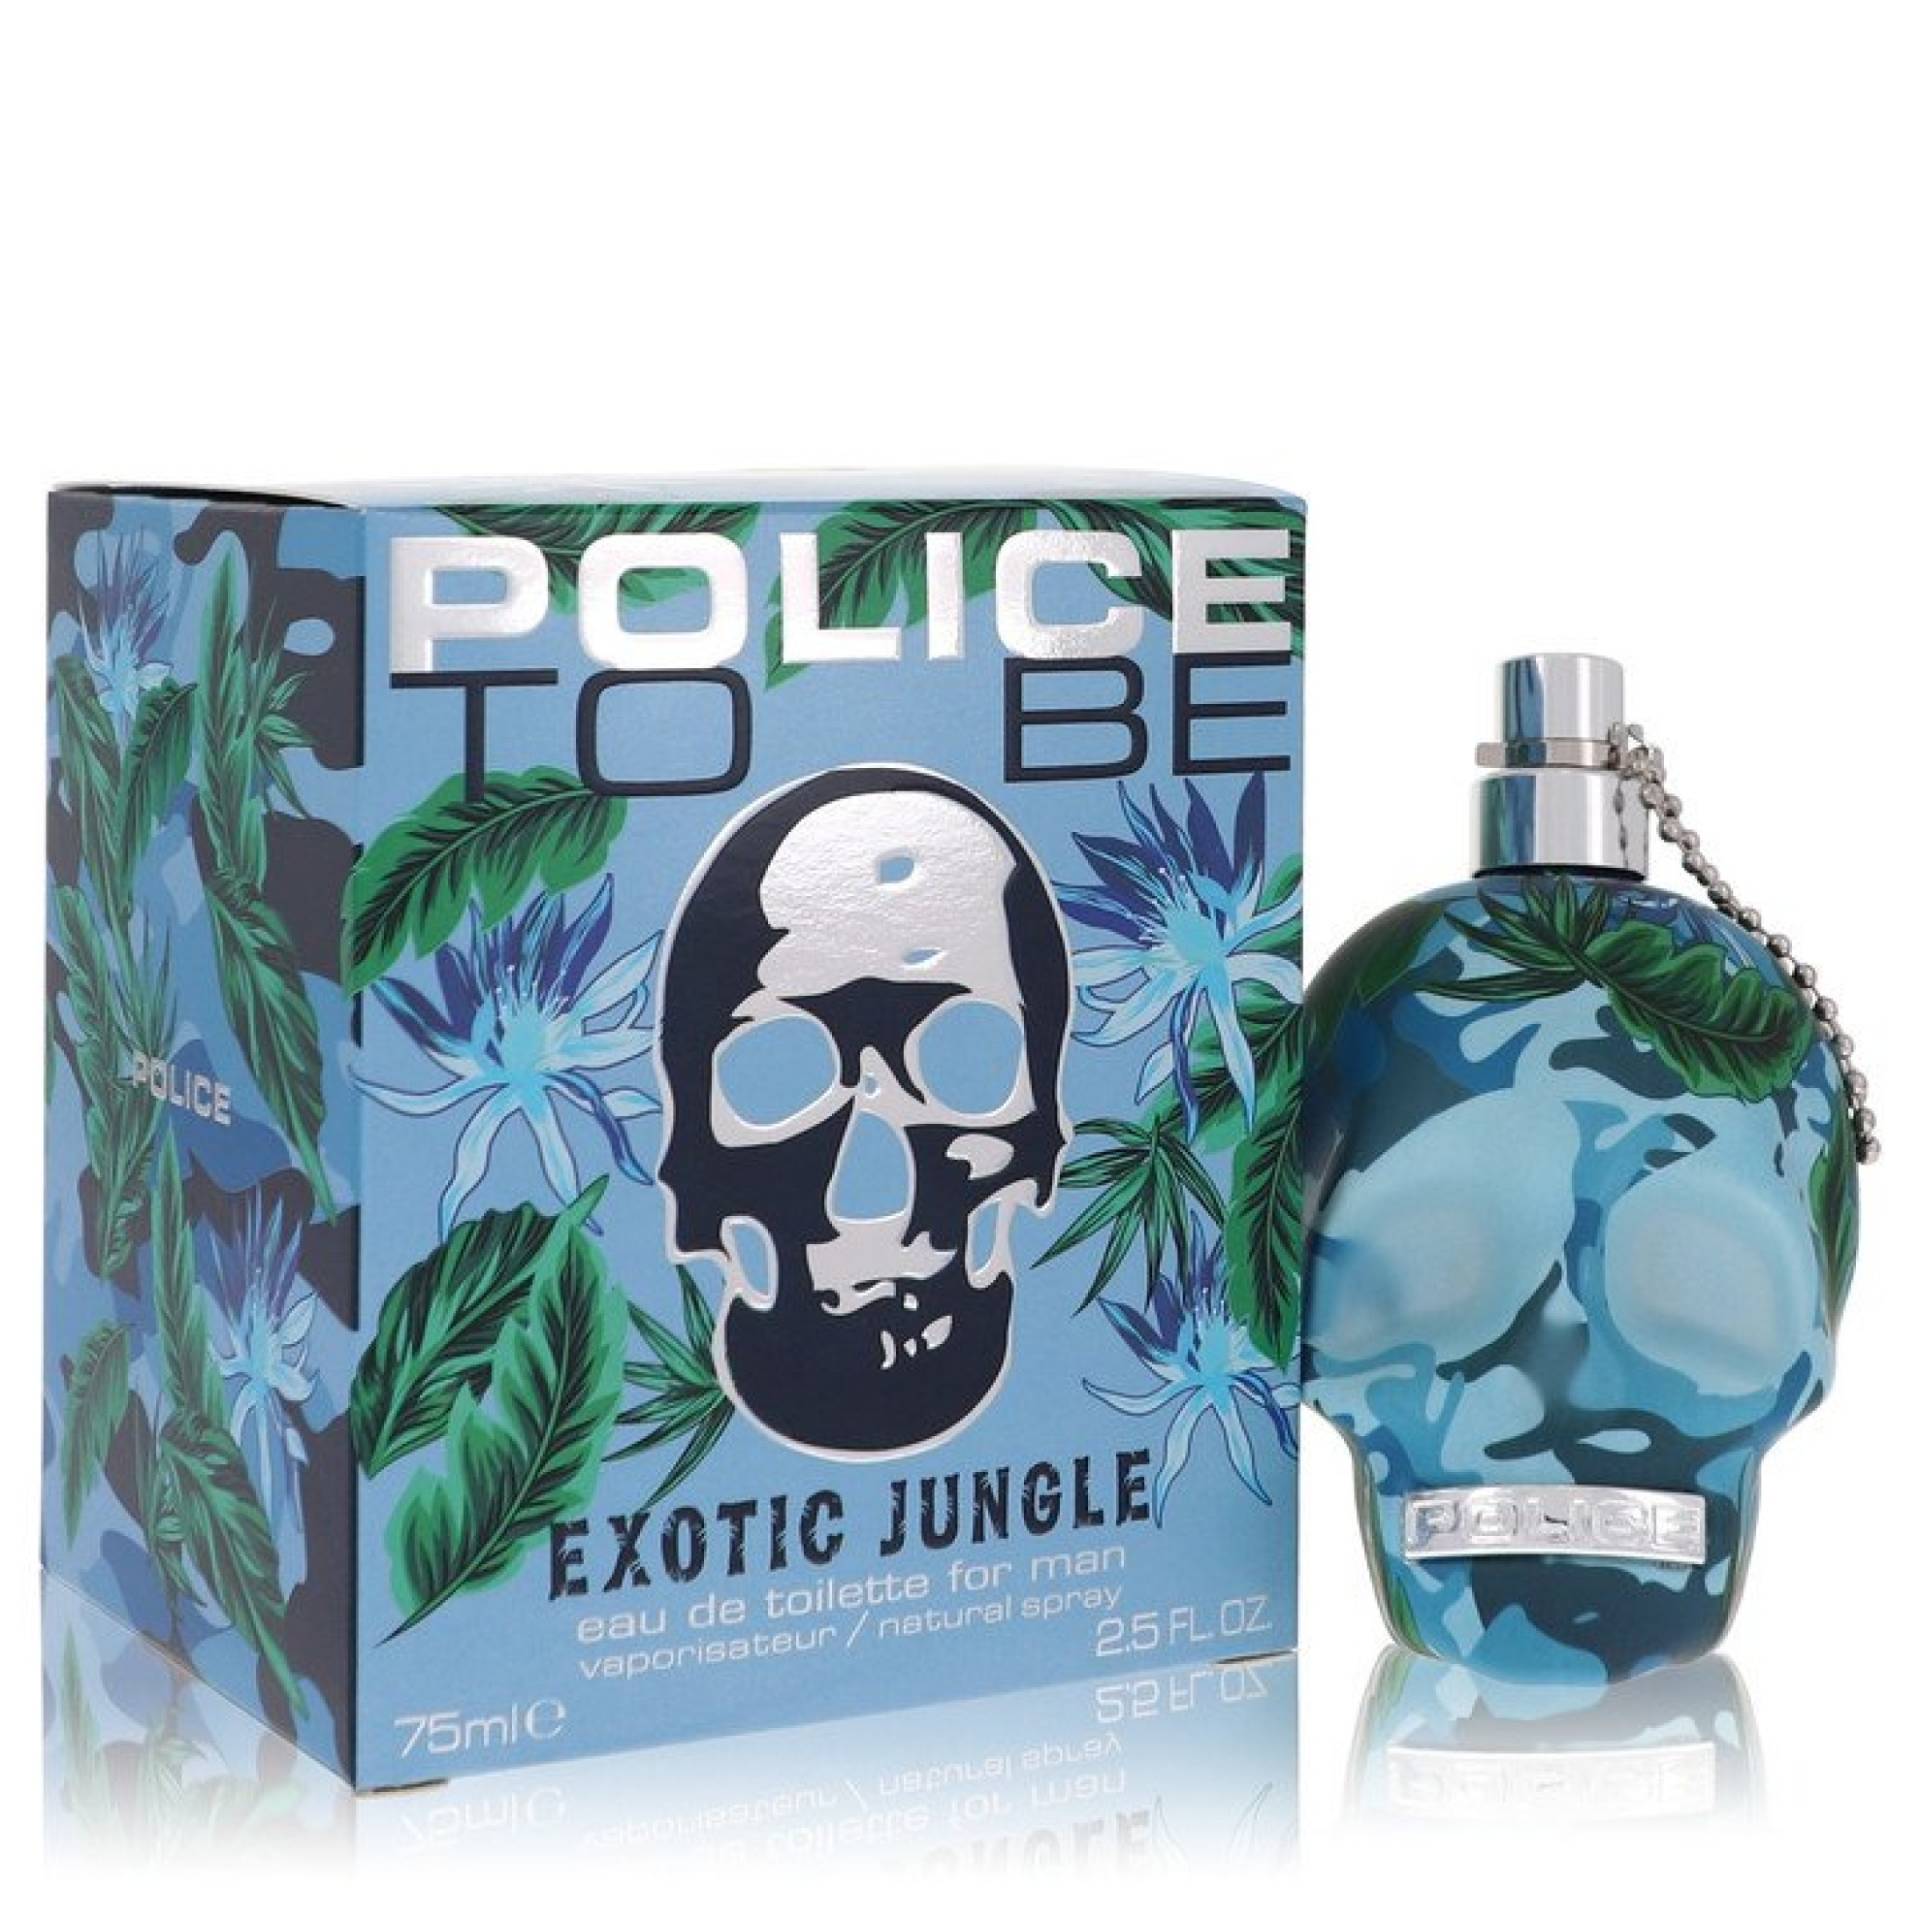 Police Colognes Police To Be Exotic Jungle Eau De Toilette Spray 73 ml von Police Colognes